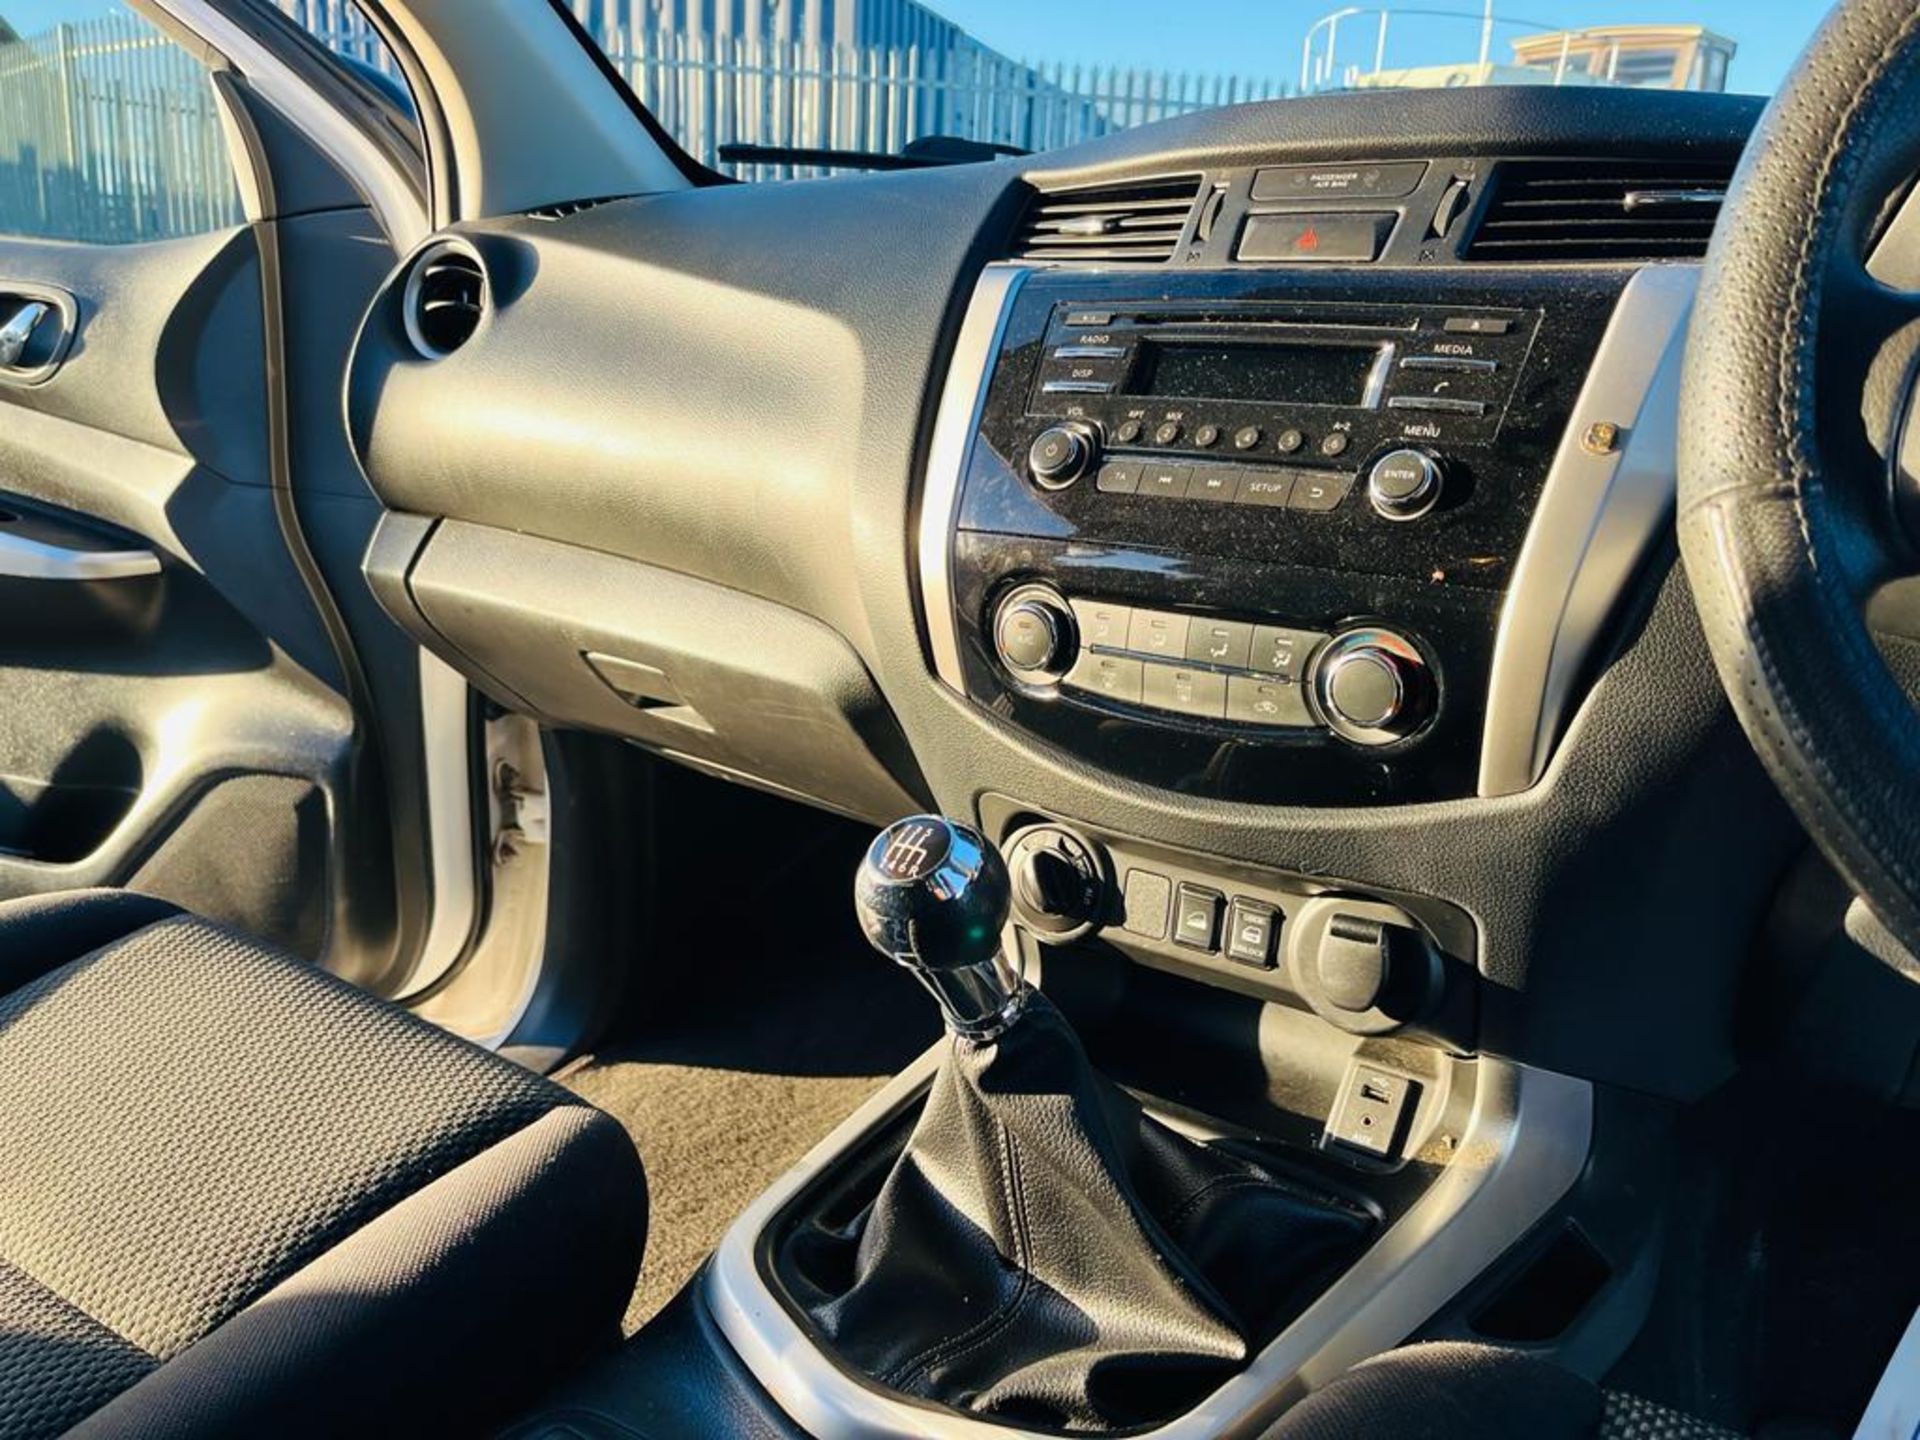 ** ON SALE ** Nissan Navara 2.3 DCI 163 Acenta CrewCab 4WD Pickup 2019 '19 Reg' ULEZ Compliant - Image 18 of 34